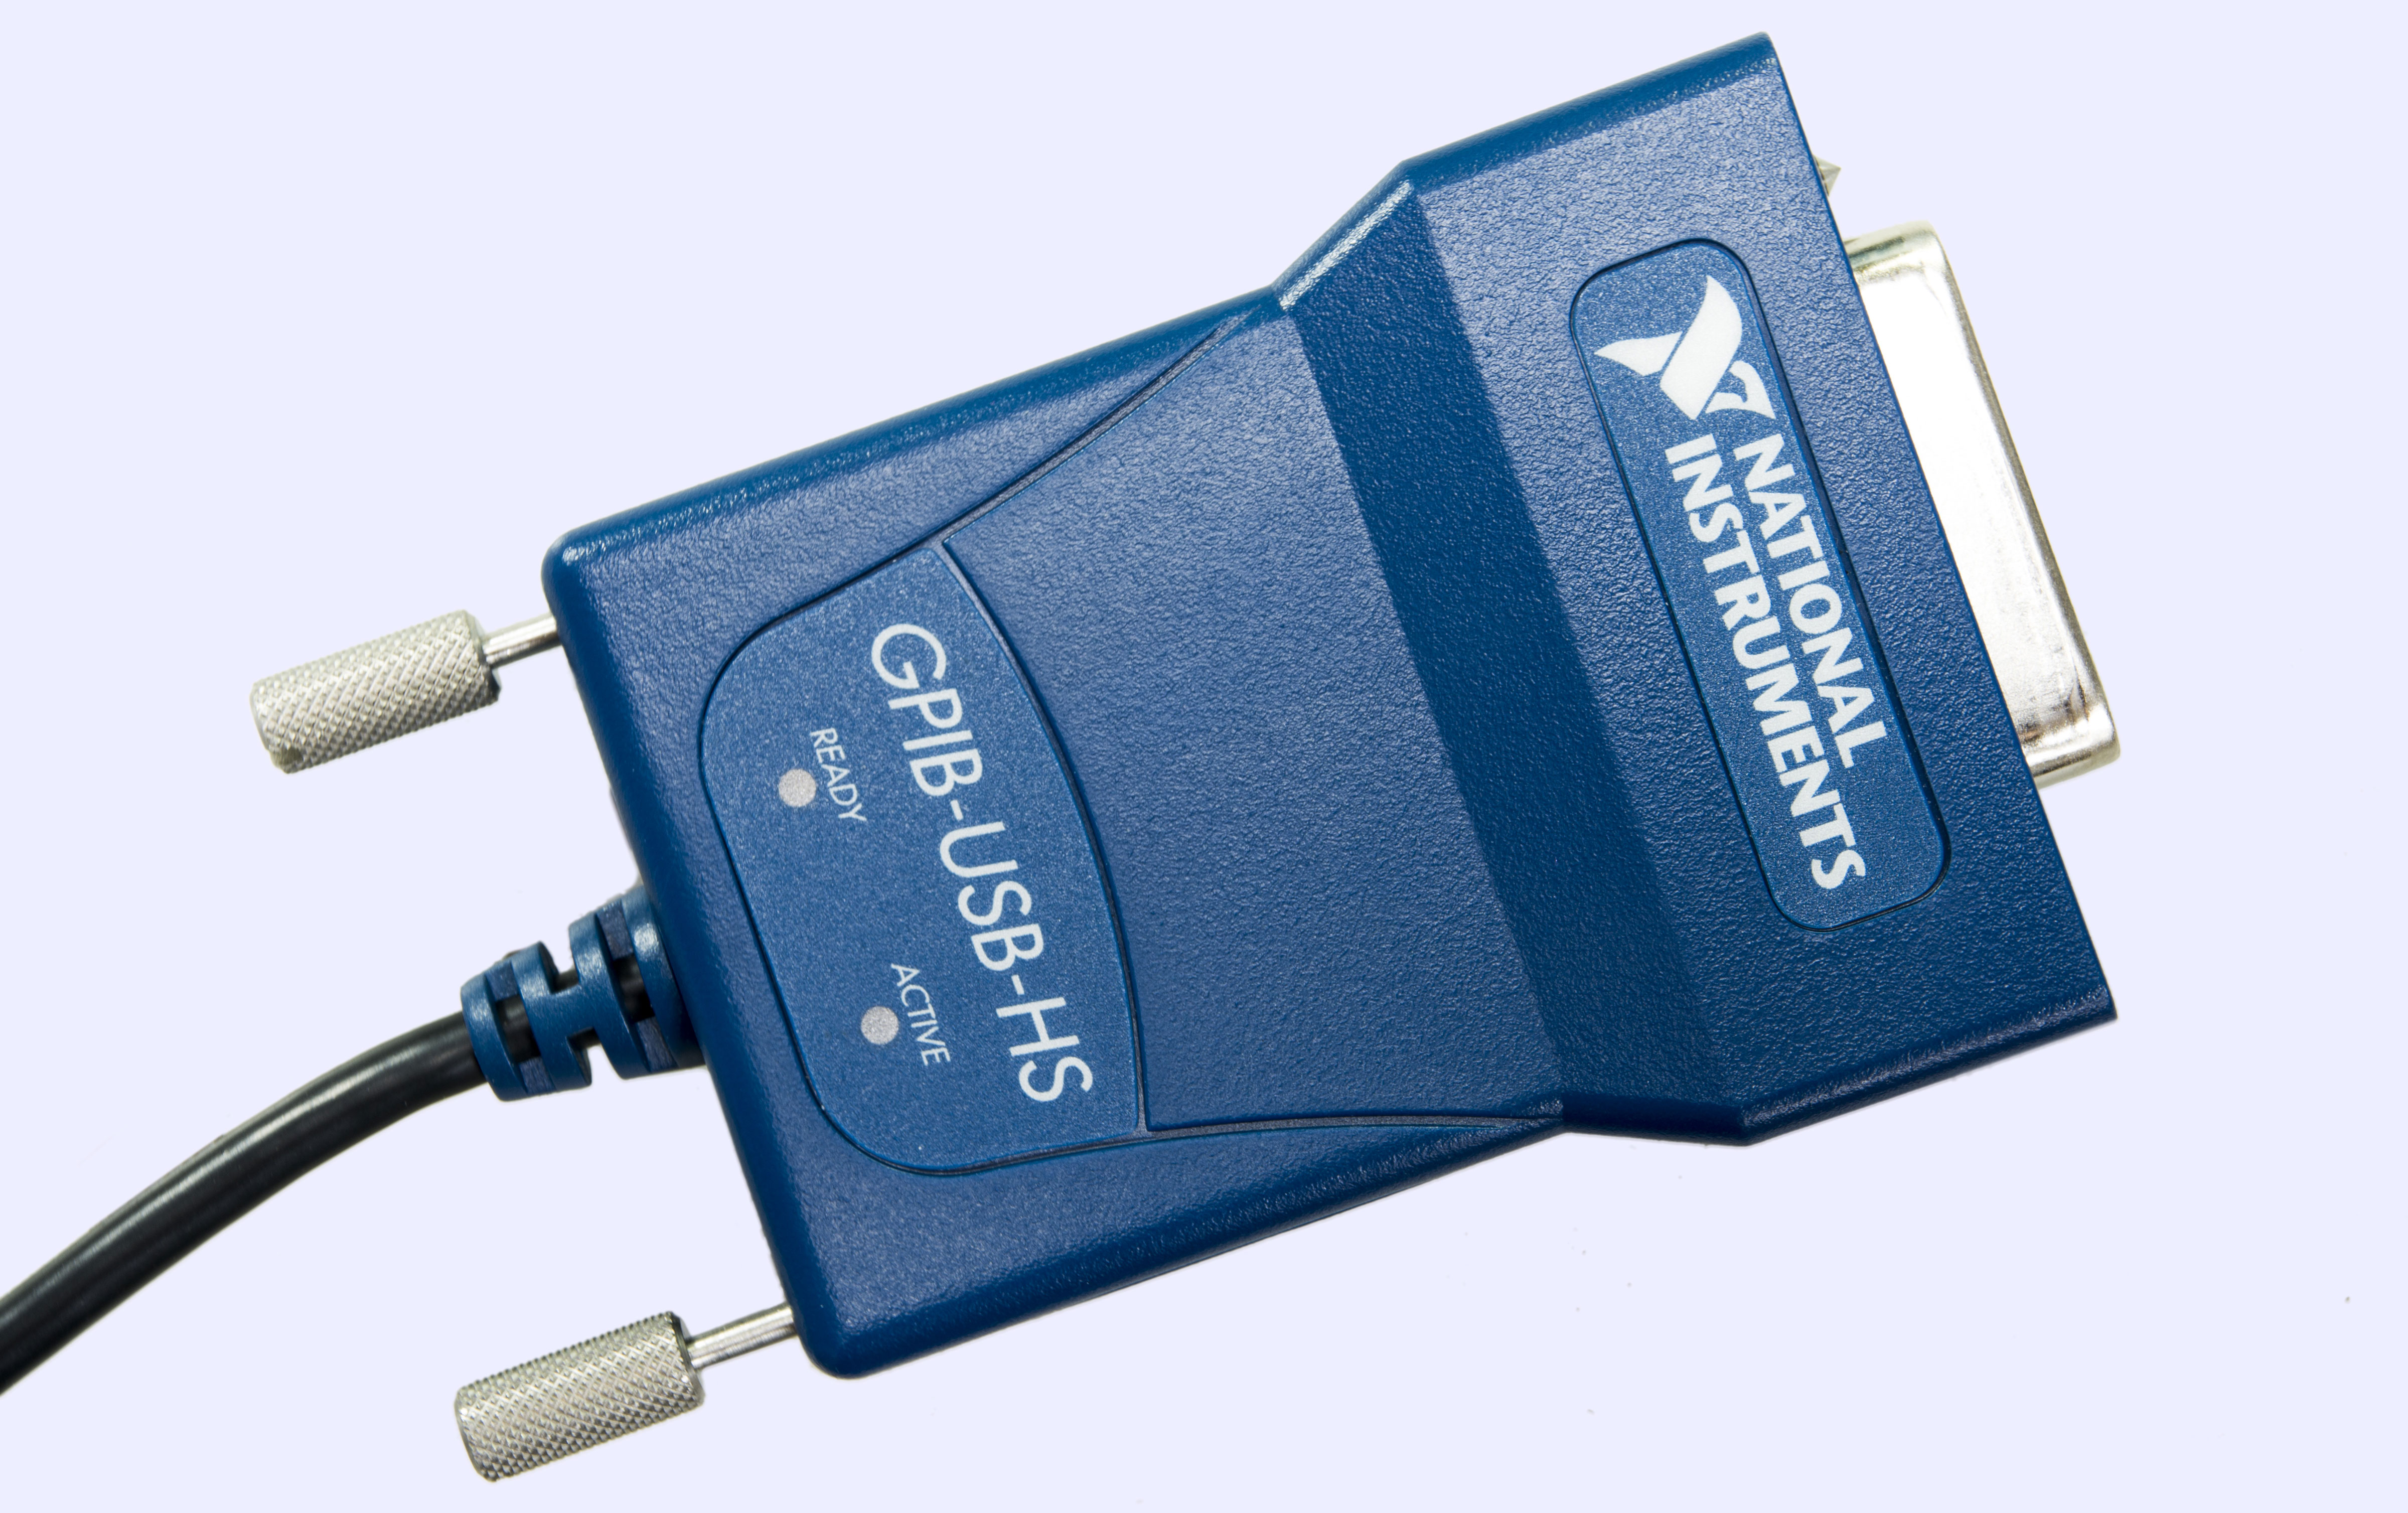 USB 2.0 NI GPIB-USB-HS National Instrumens Interface Adapter controller IEEE 488 